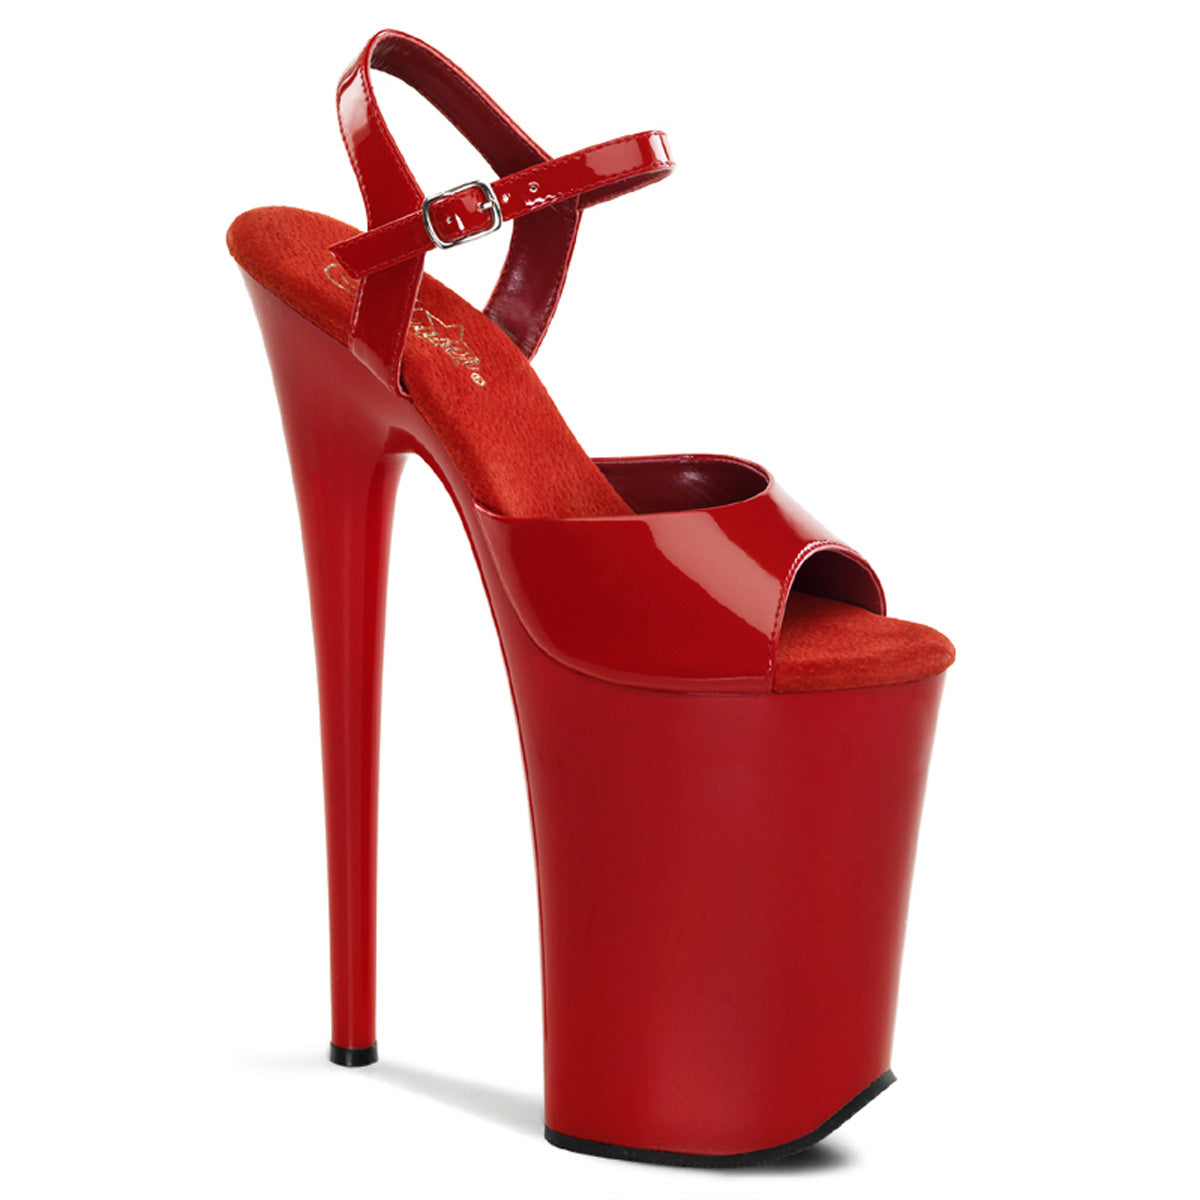 INFINITY-909 Pleaser 9 Inch Heel Red  Stripper Platforms High Heels